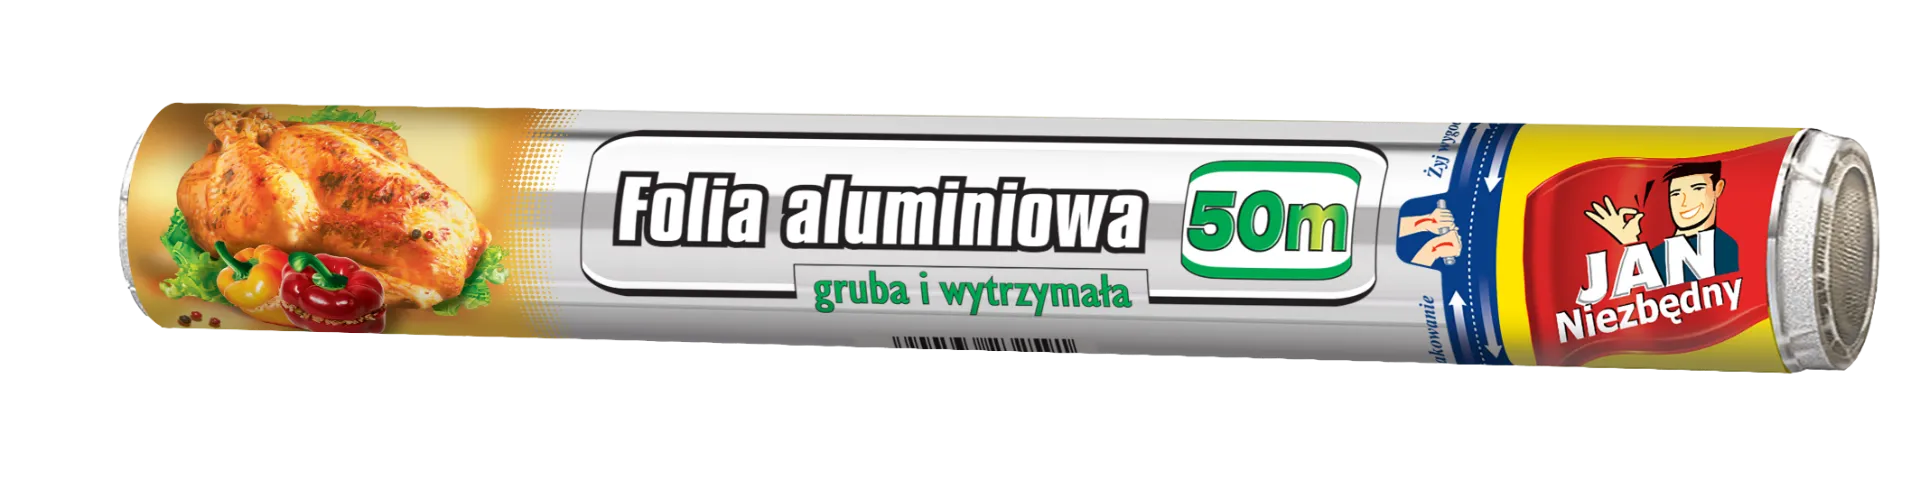 Jan Niezbędny Folia aluminiowa 50 m, 1 szt.